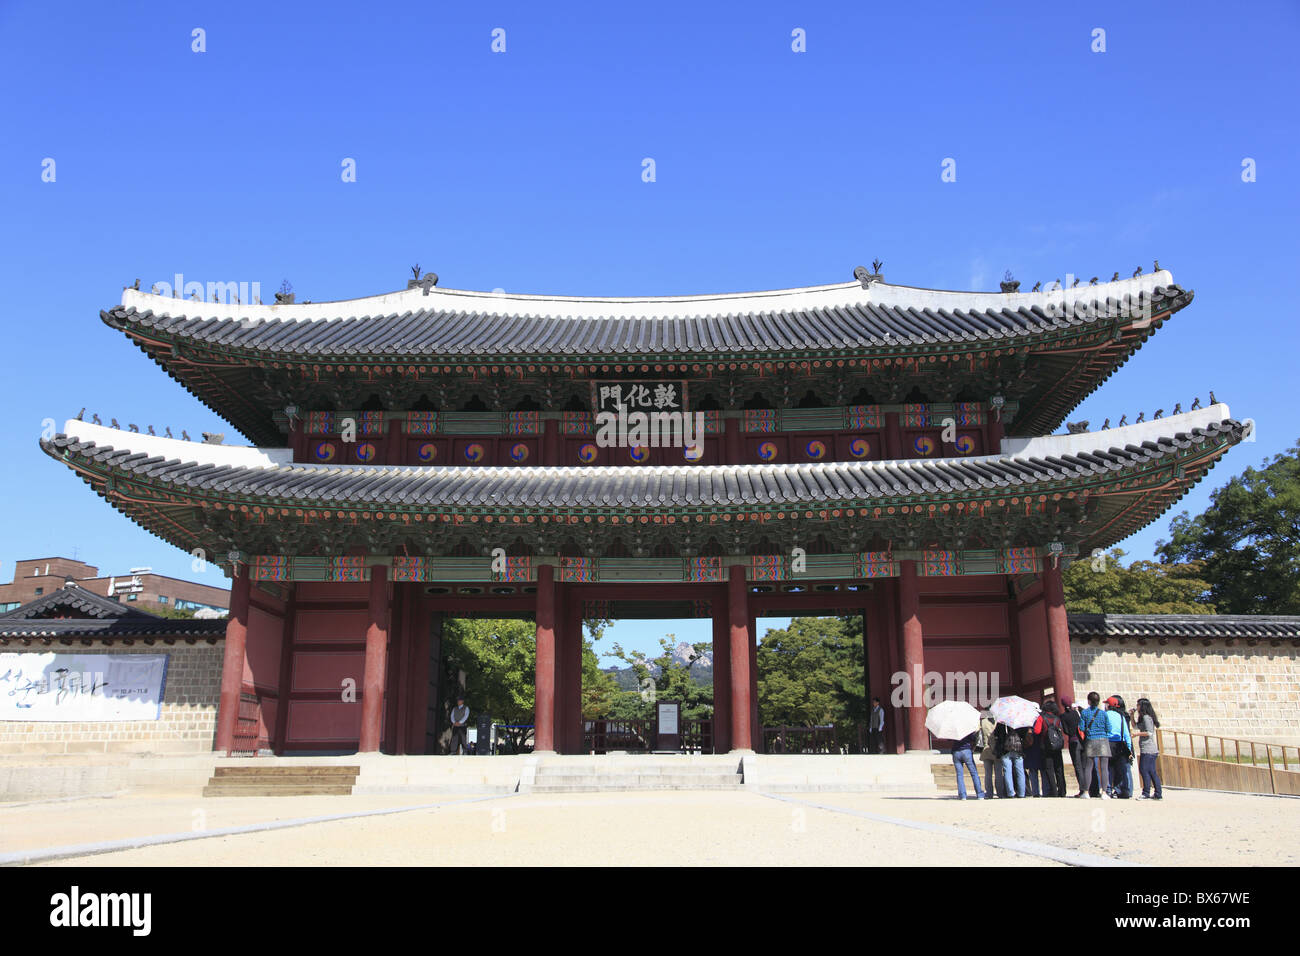 Donhwamun Gate, Changdeokgung Palace (Palace of Illustrious Virtue), UNESCO World Heritage Site, Seoul, South Korea, Asia Stock Photo